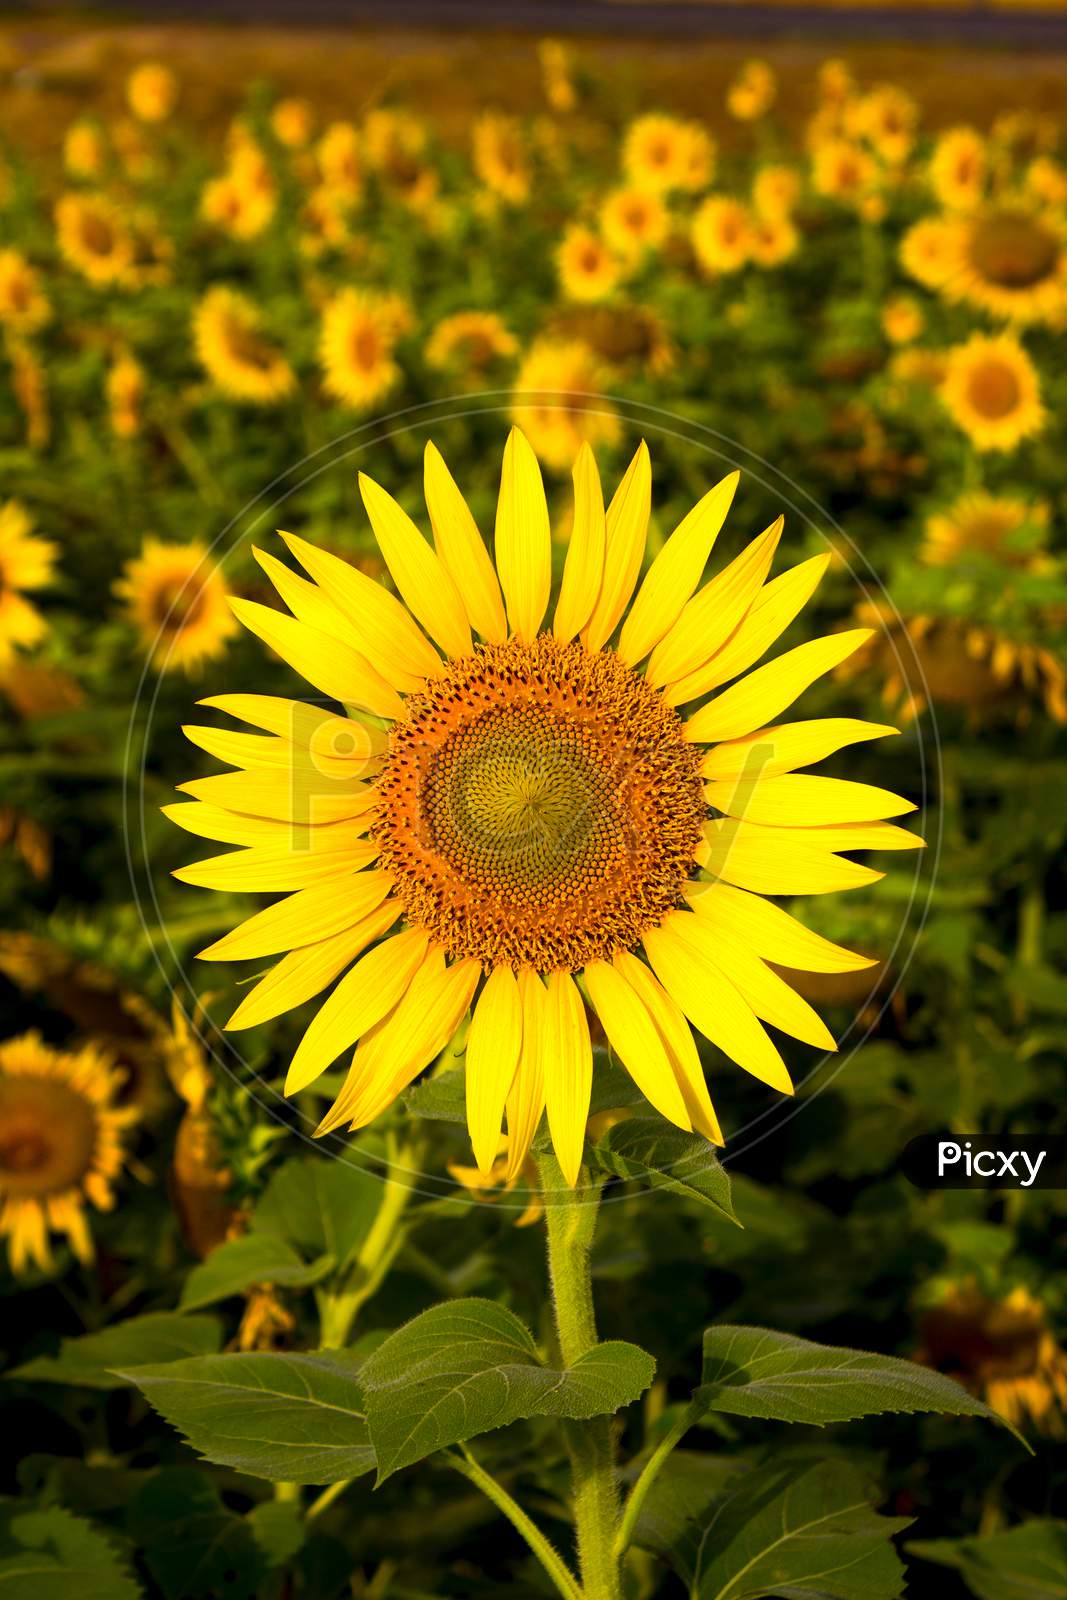 Selective focus on a Sunflower